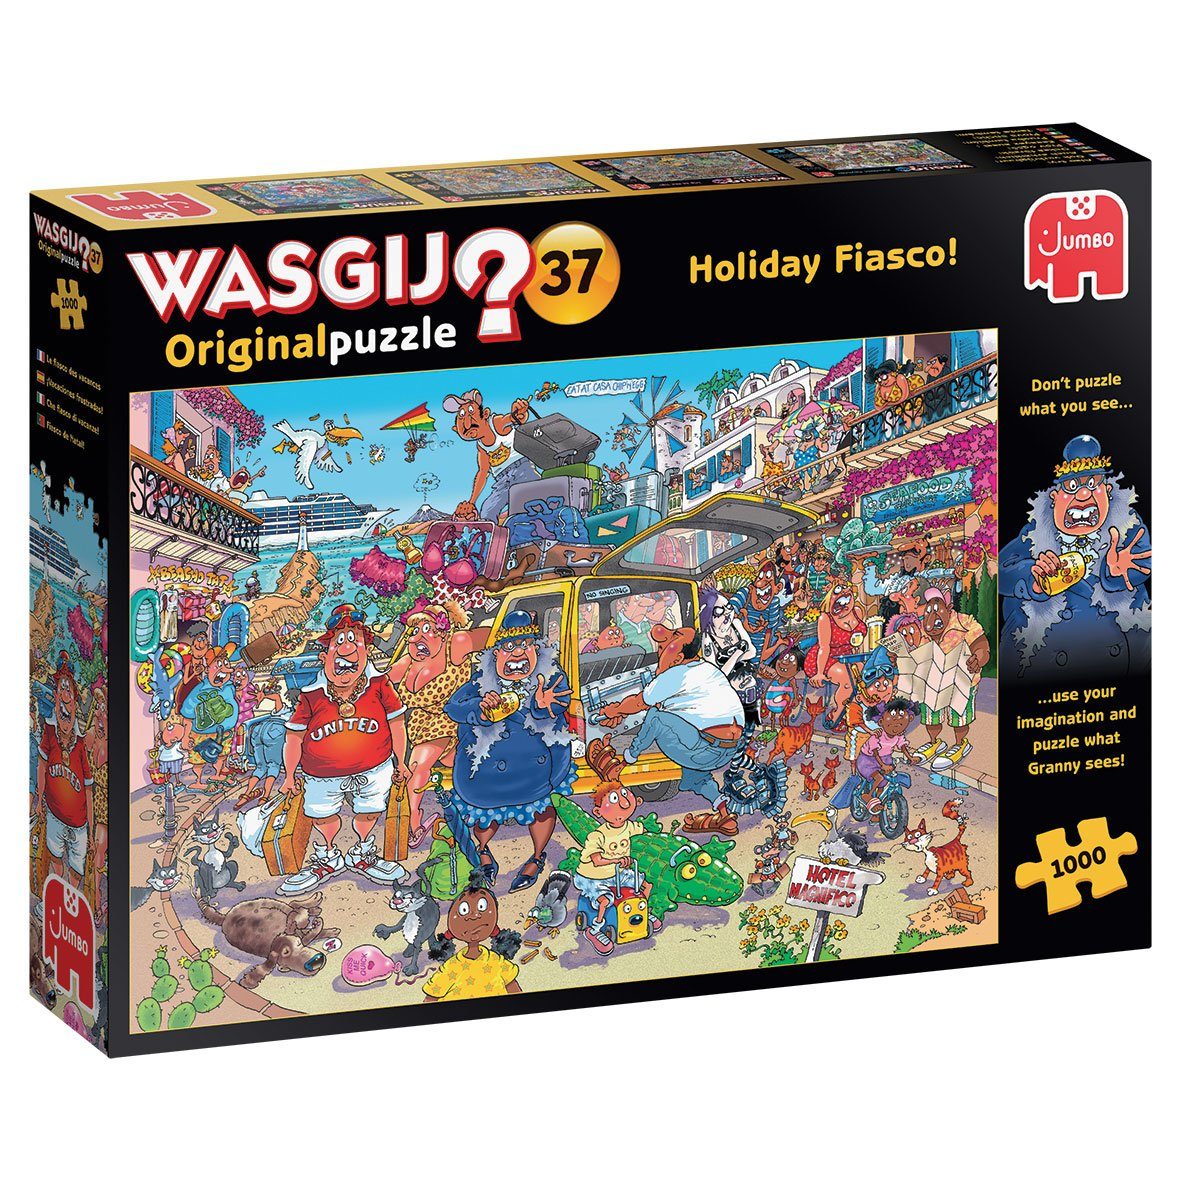 Jumbo Spiele Puzzle 25004 Wasgij Original 37 Holiday Fiasco!, 1000 Puzzleteile, Puzzeln Sie was die Oma sieht.